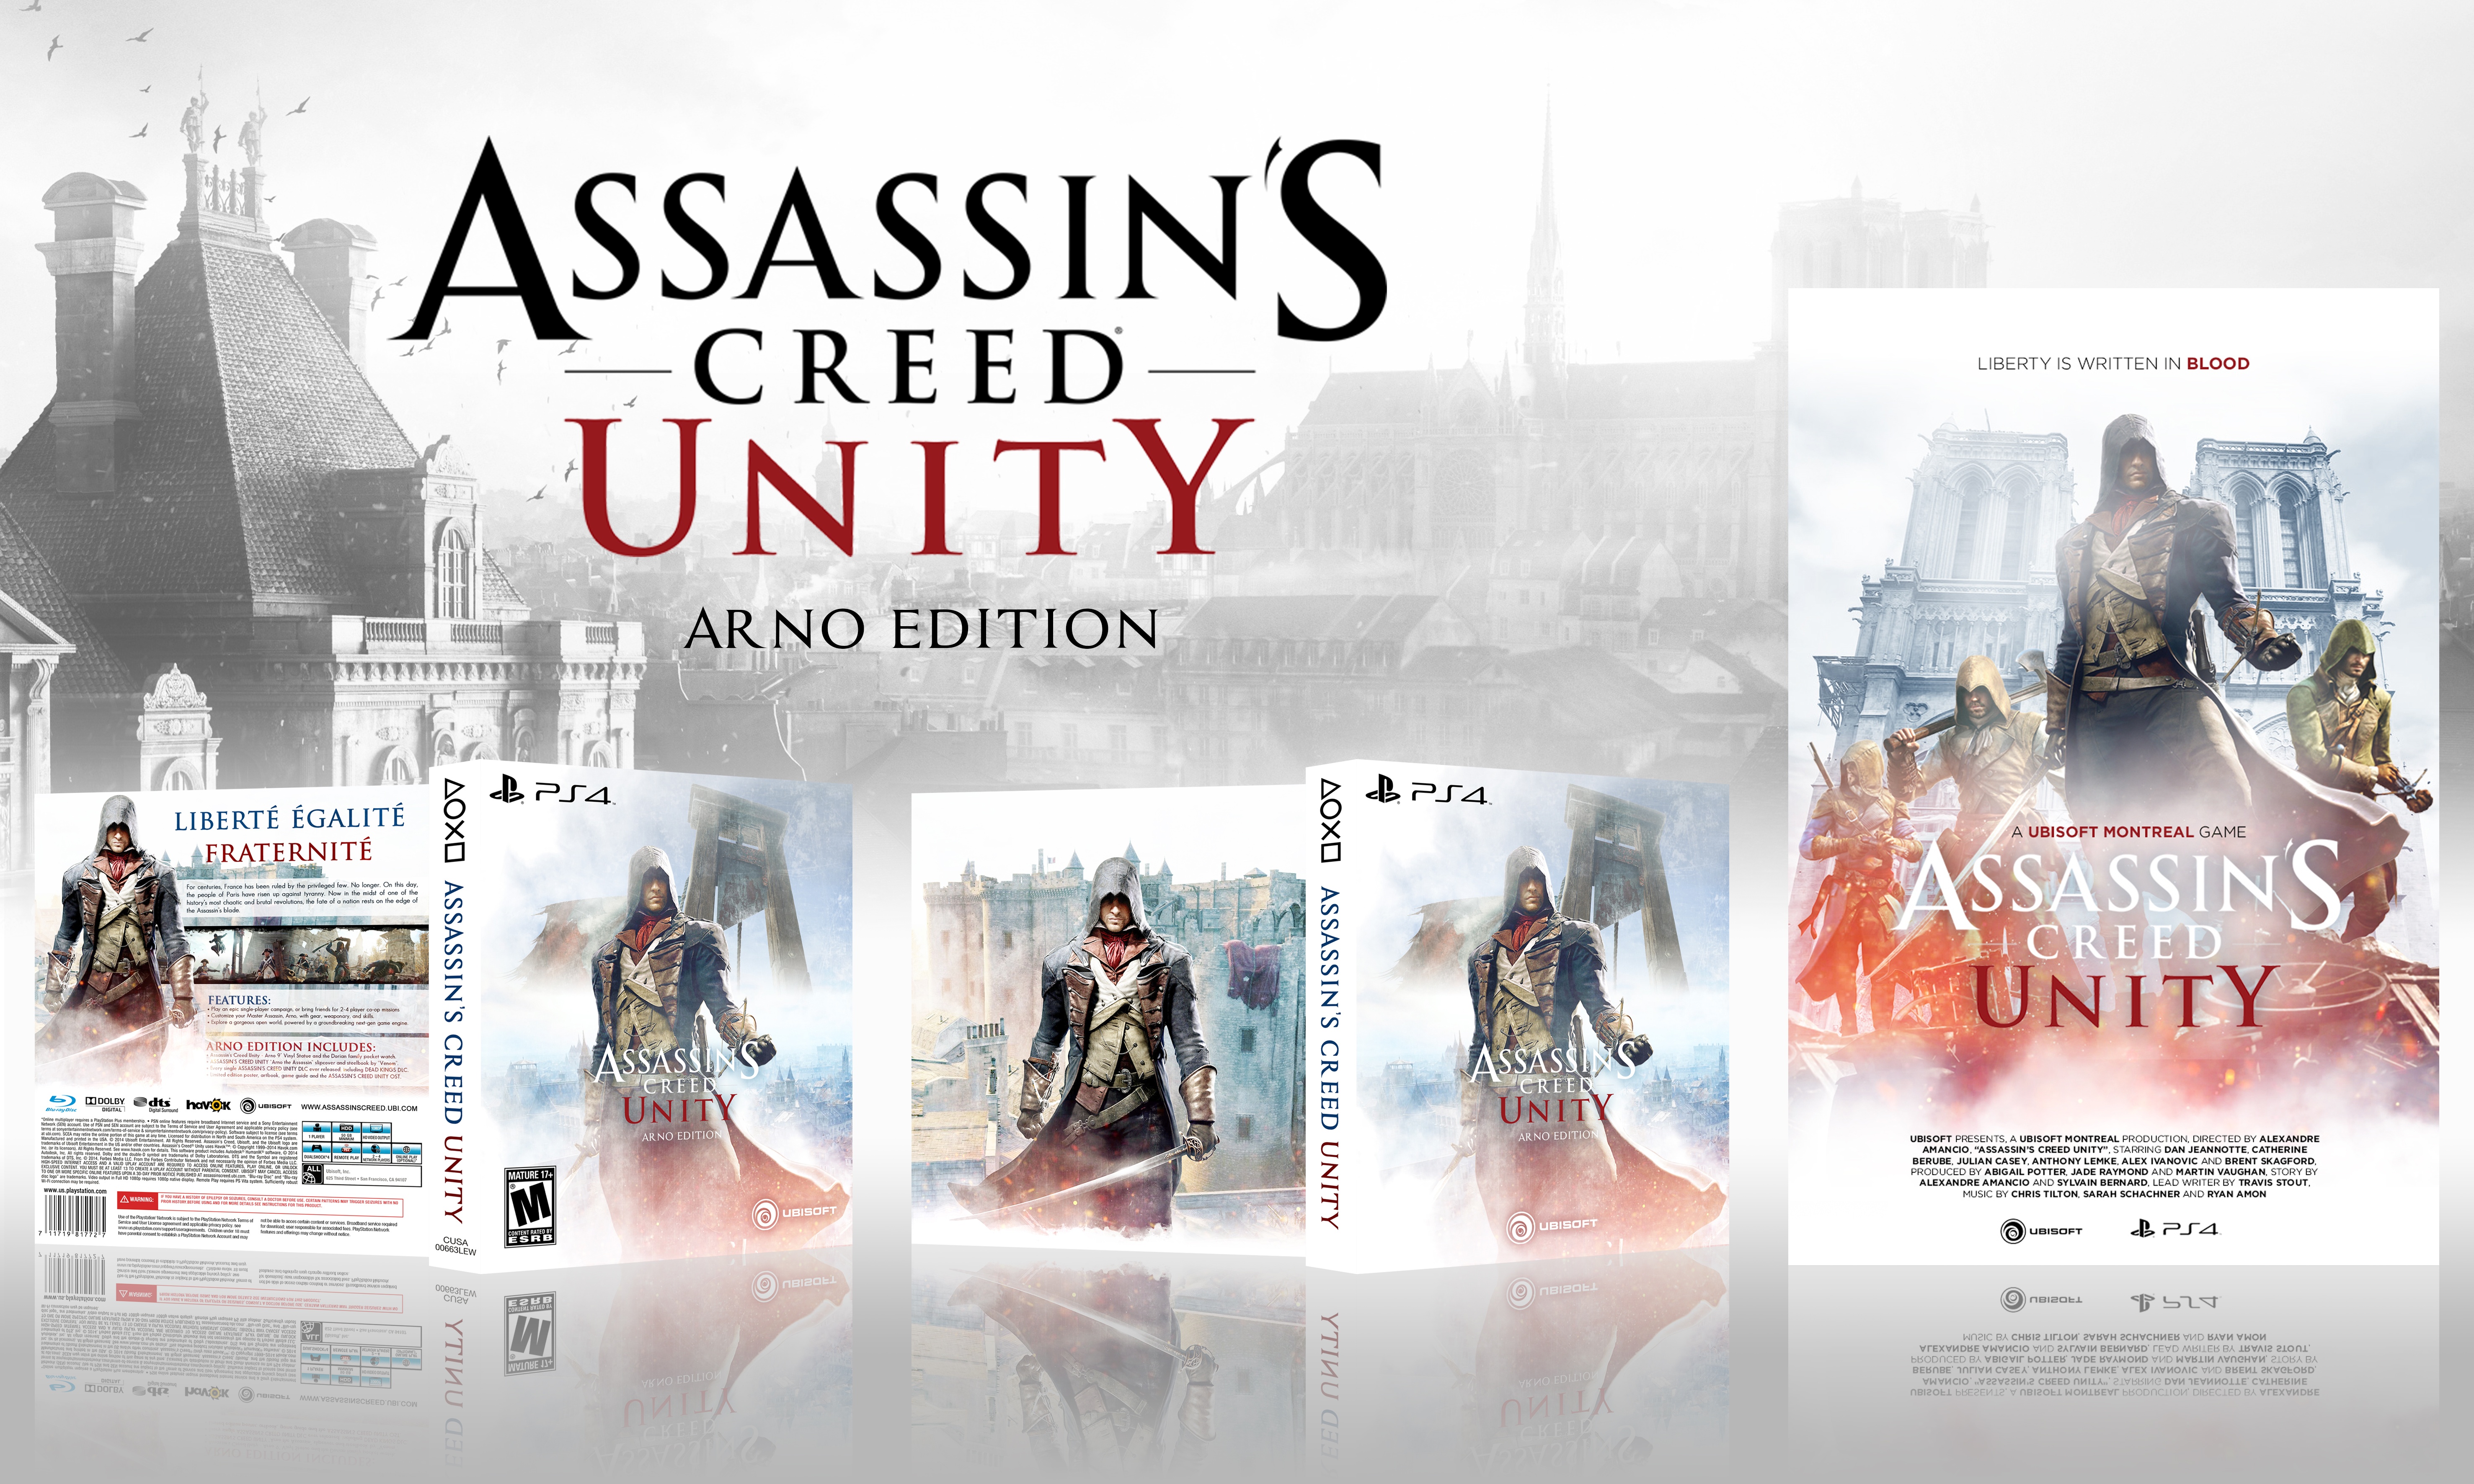 Assassin's Creed Unity: Arno Edition box cover